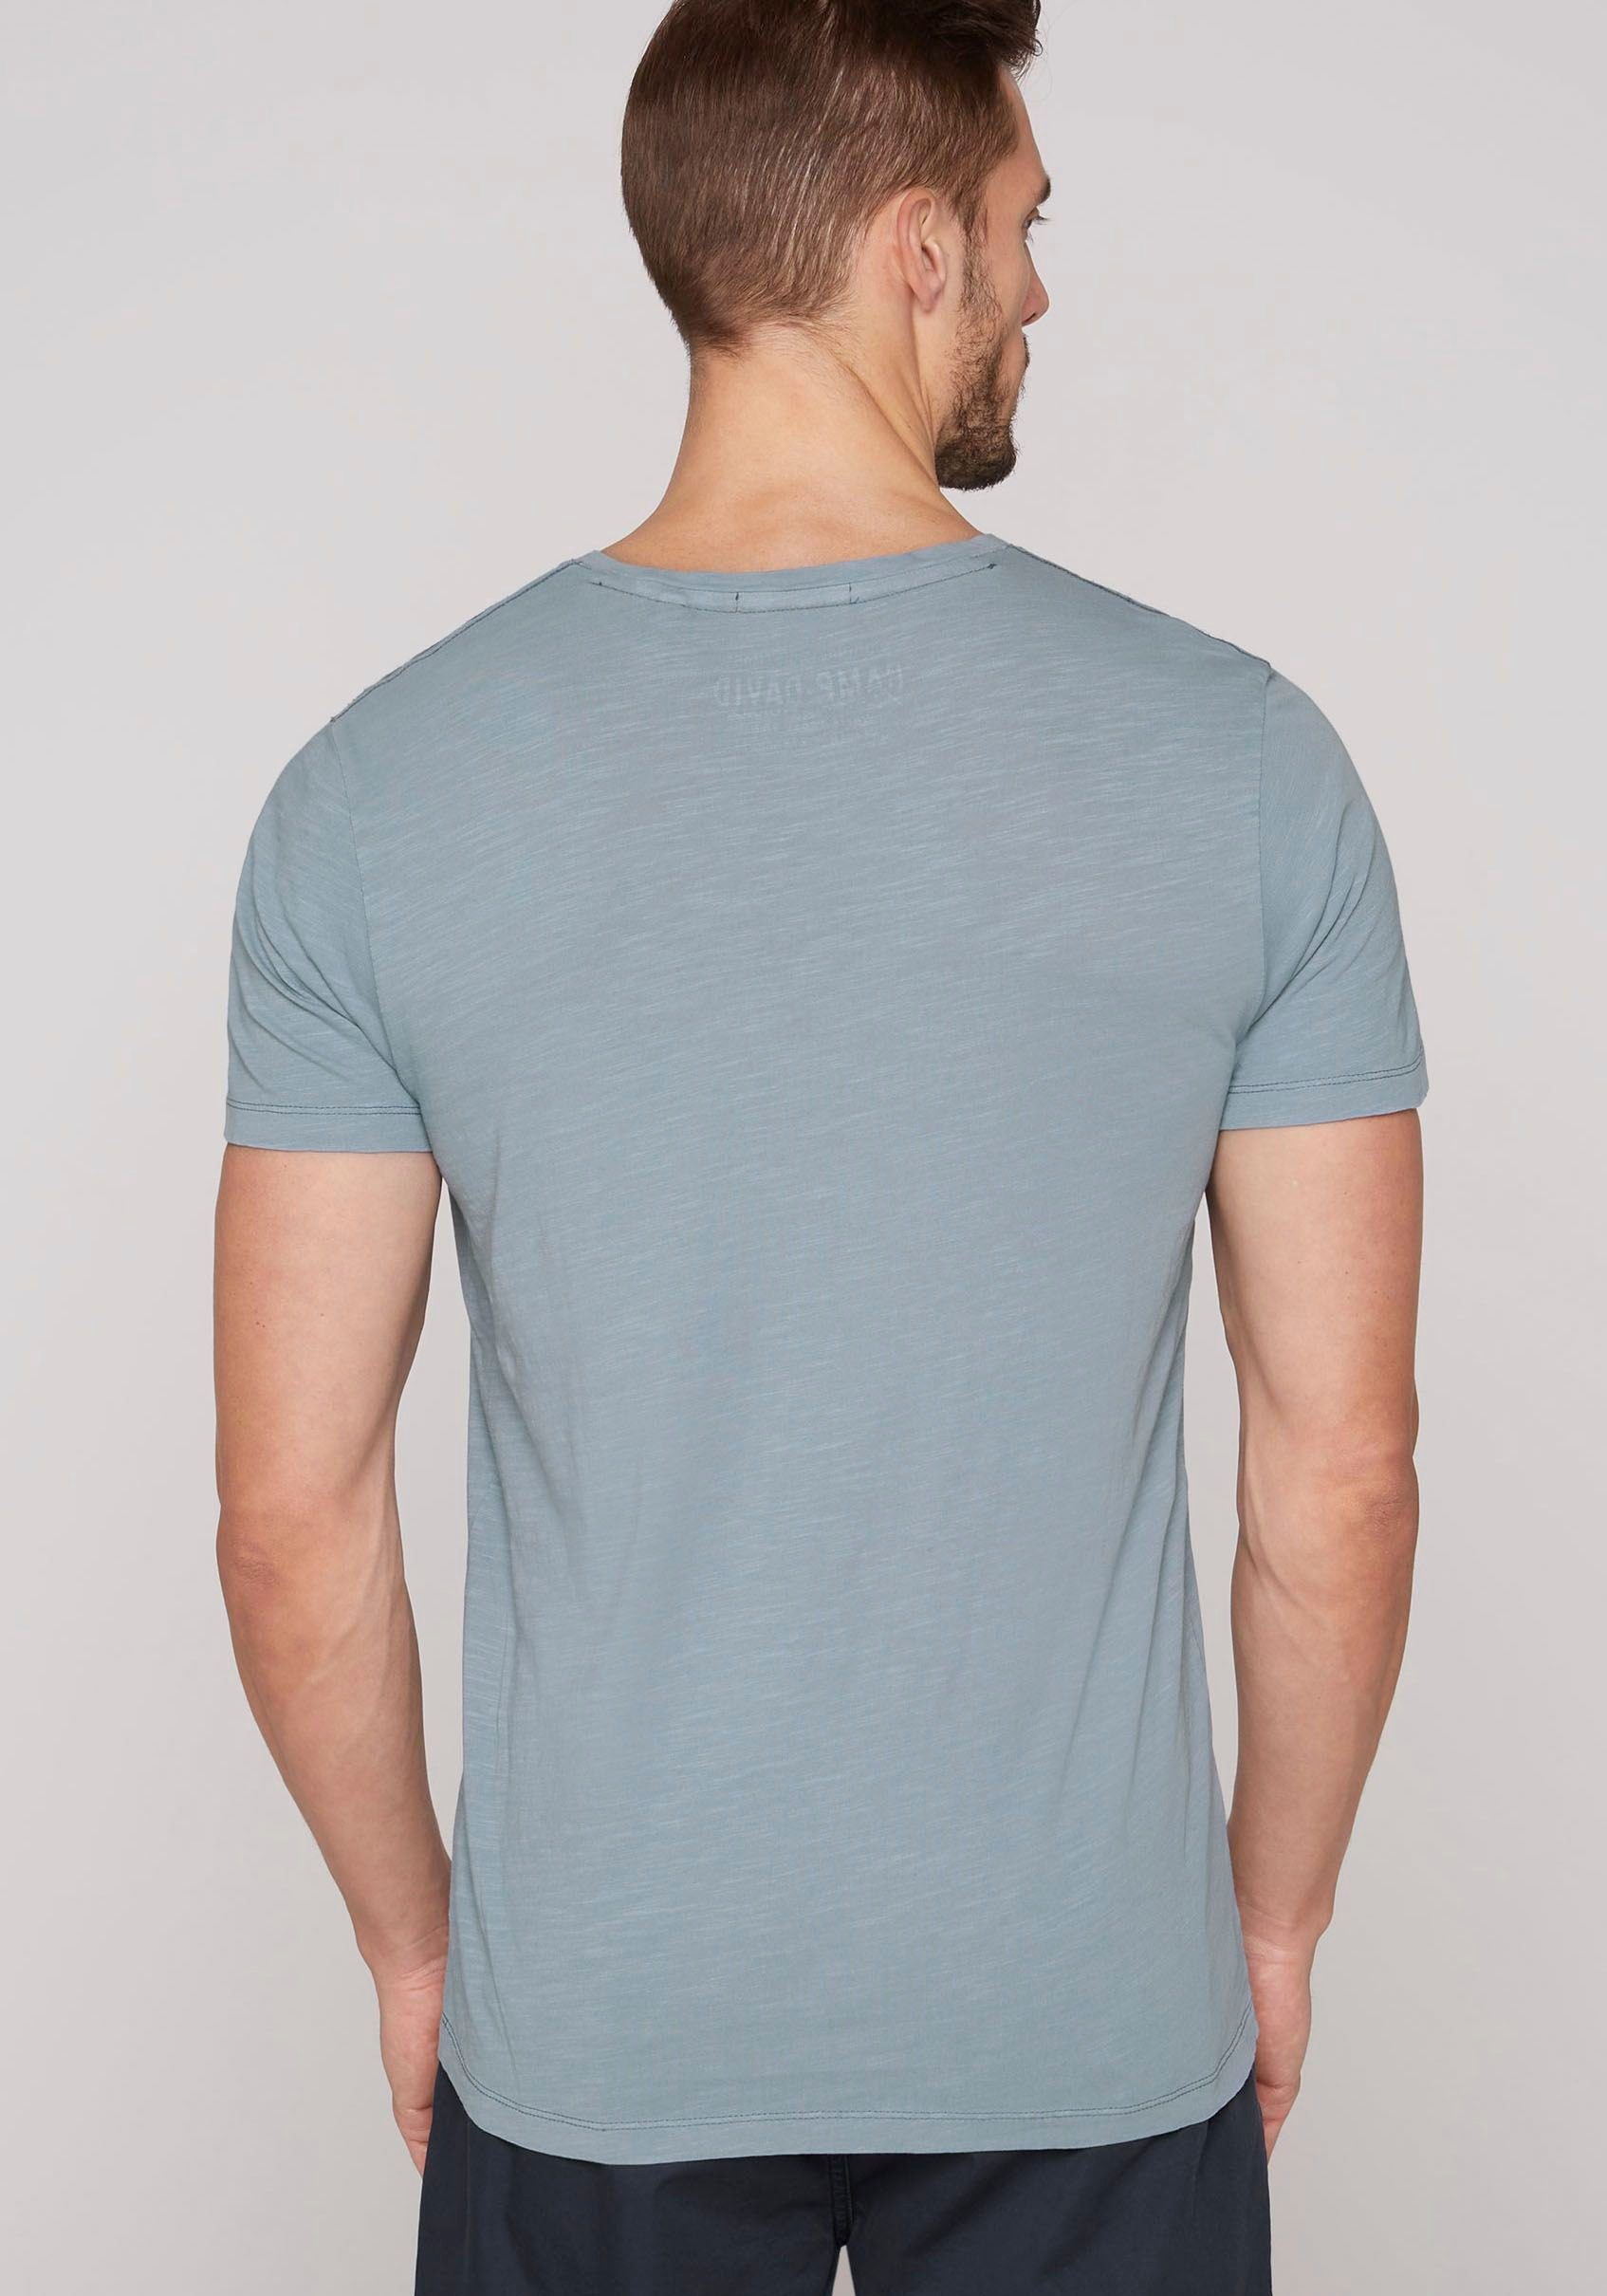 T-Shirt CAMP DAVID grey mit Logoprägung concrete